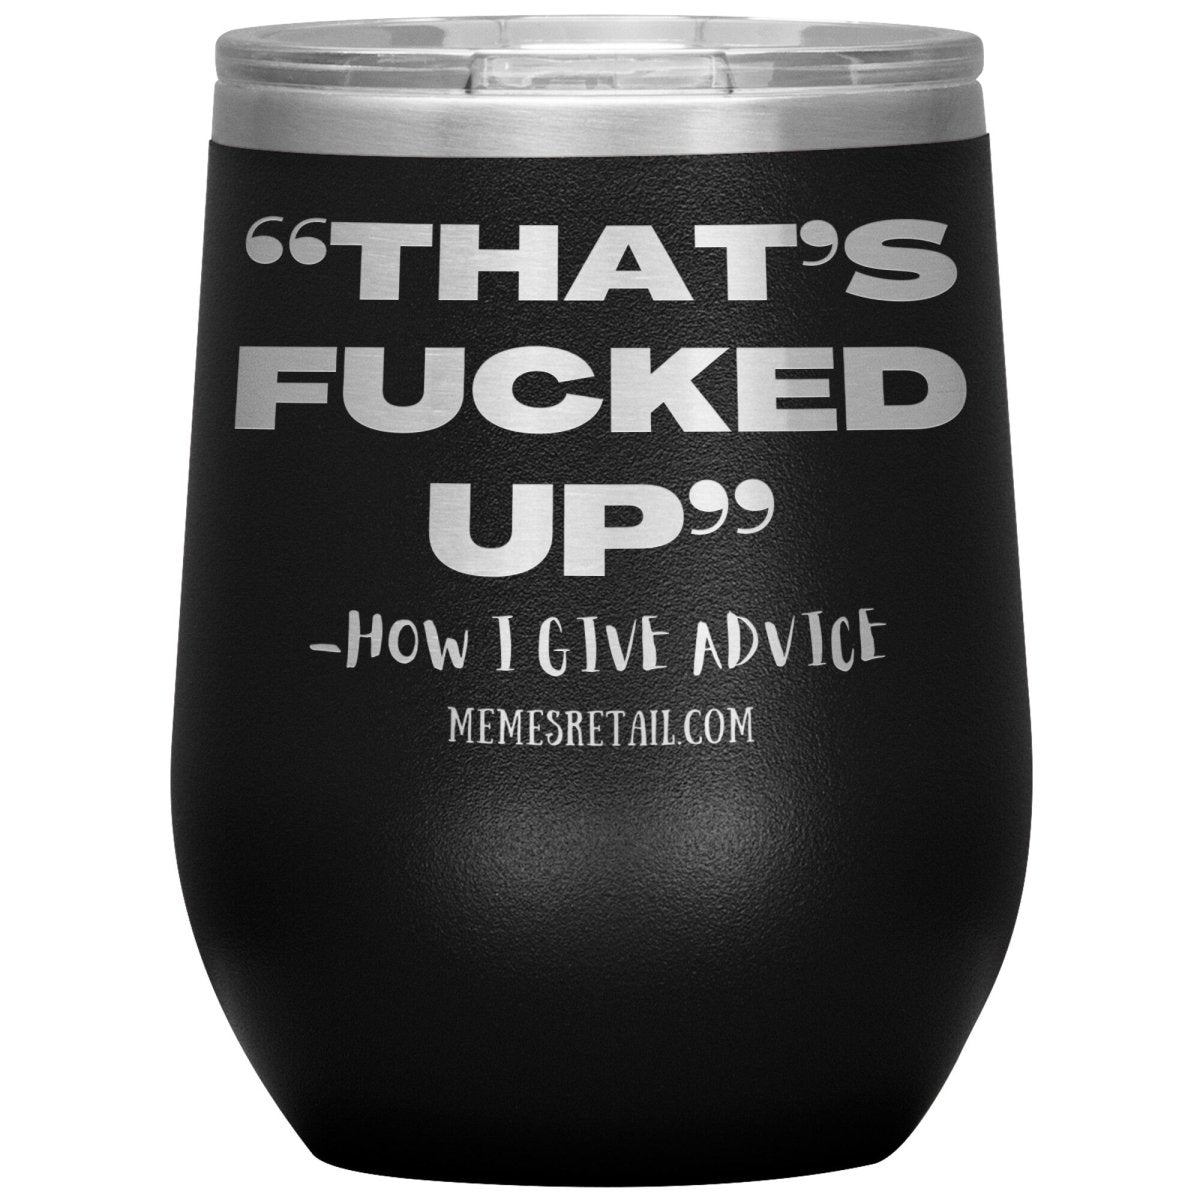 “That’s Fucked Up” -how I give advice Tumblers, 12oz Wine Insulated Tumbler / Black - MemesRetail.com